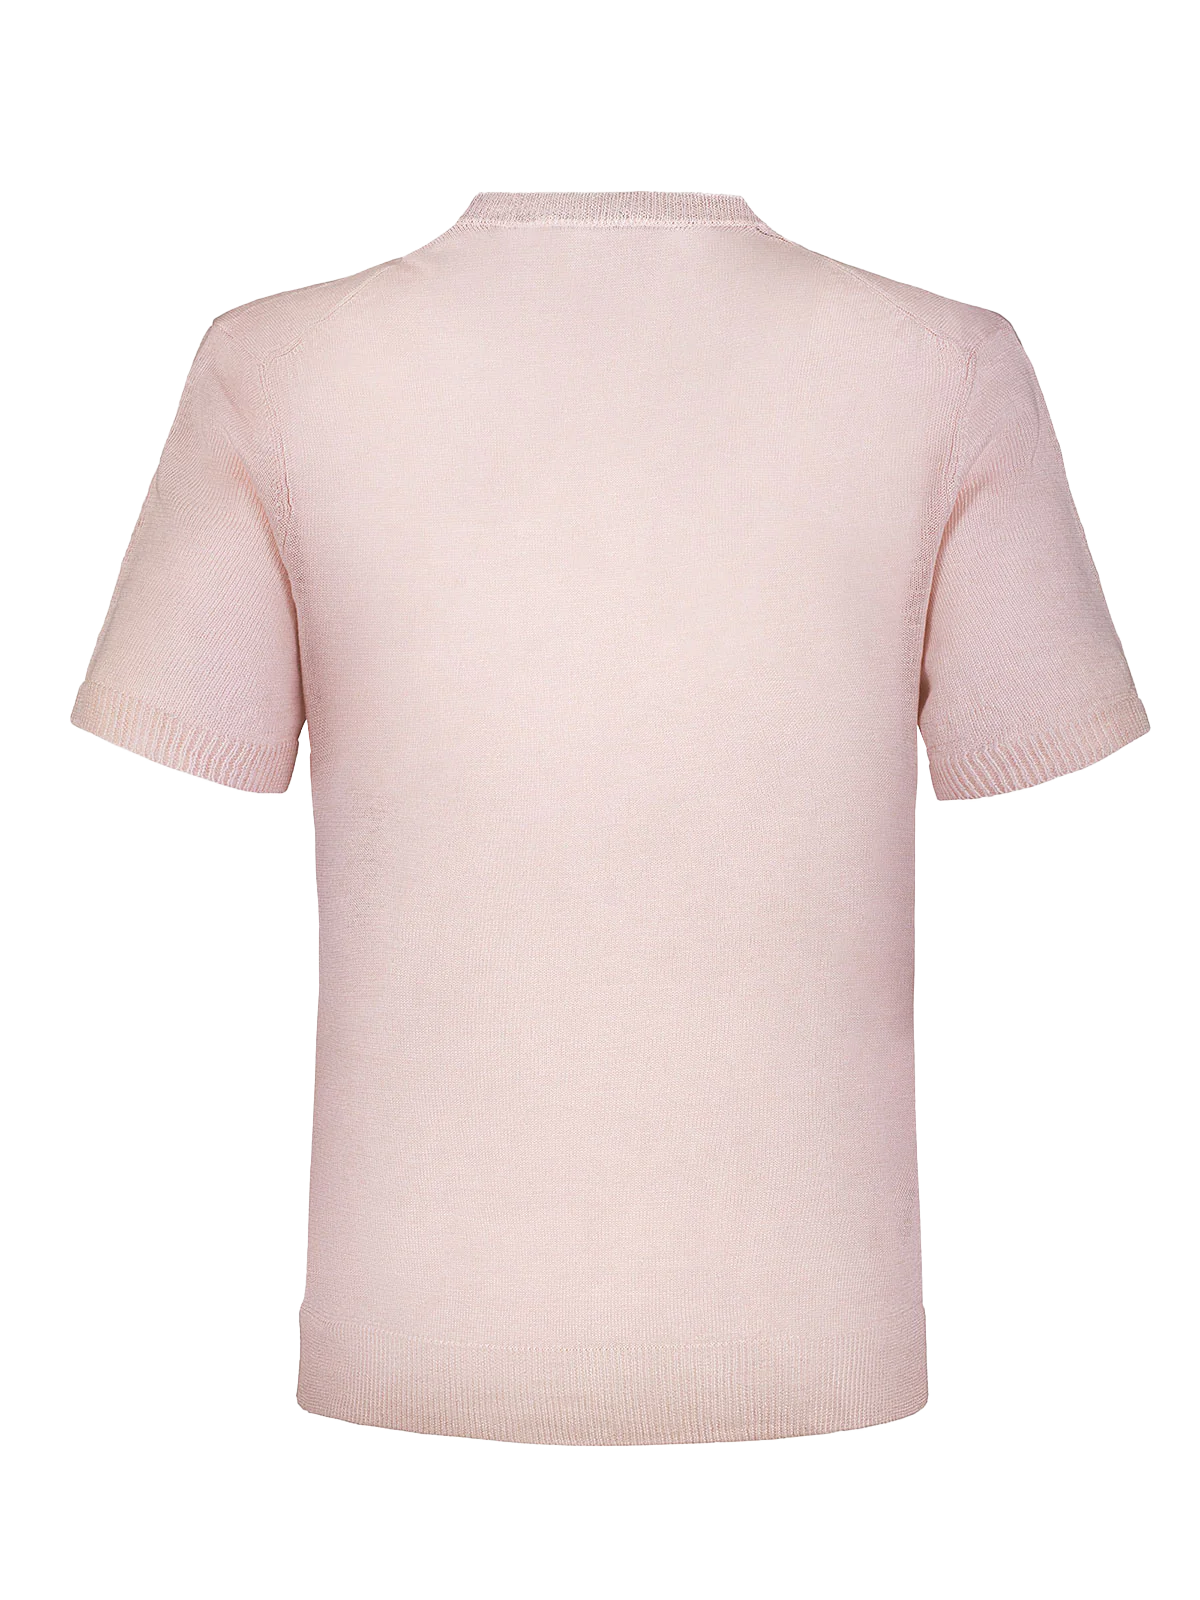 T-Shirt M/C 100% Capri pink linen t-shirt back